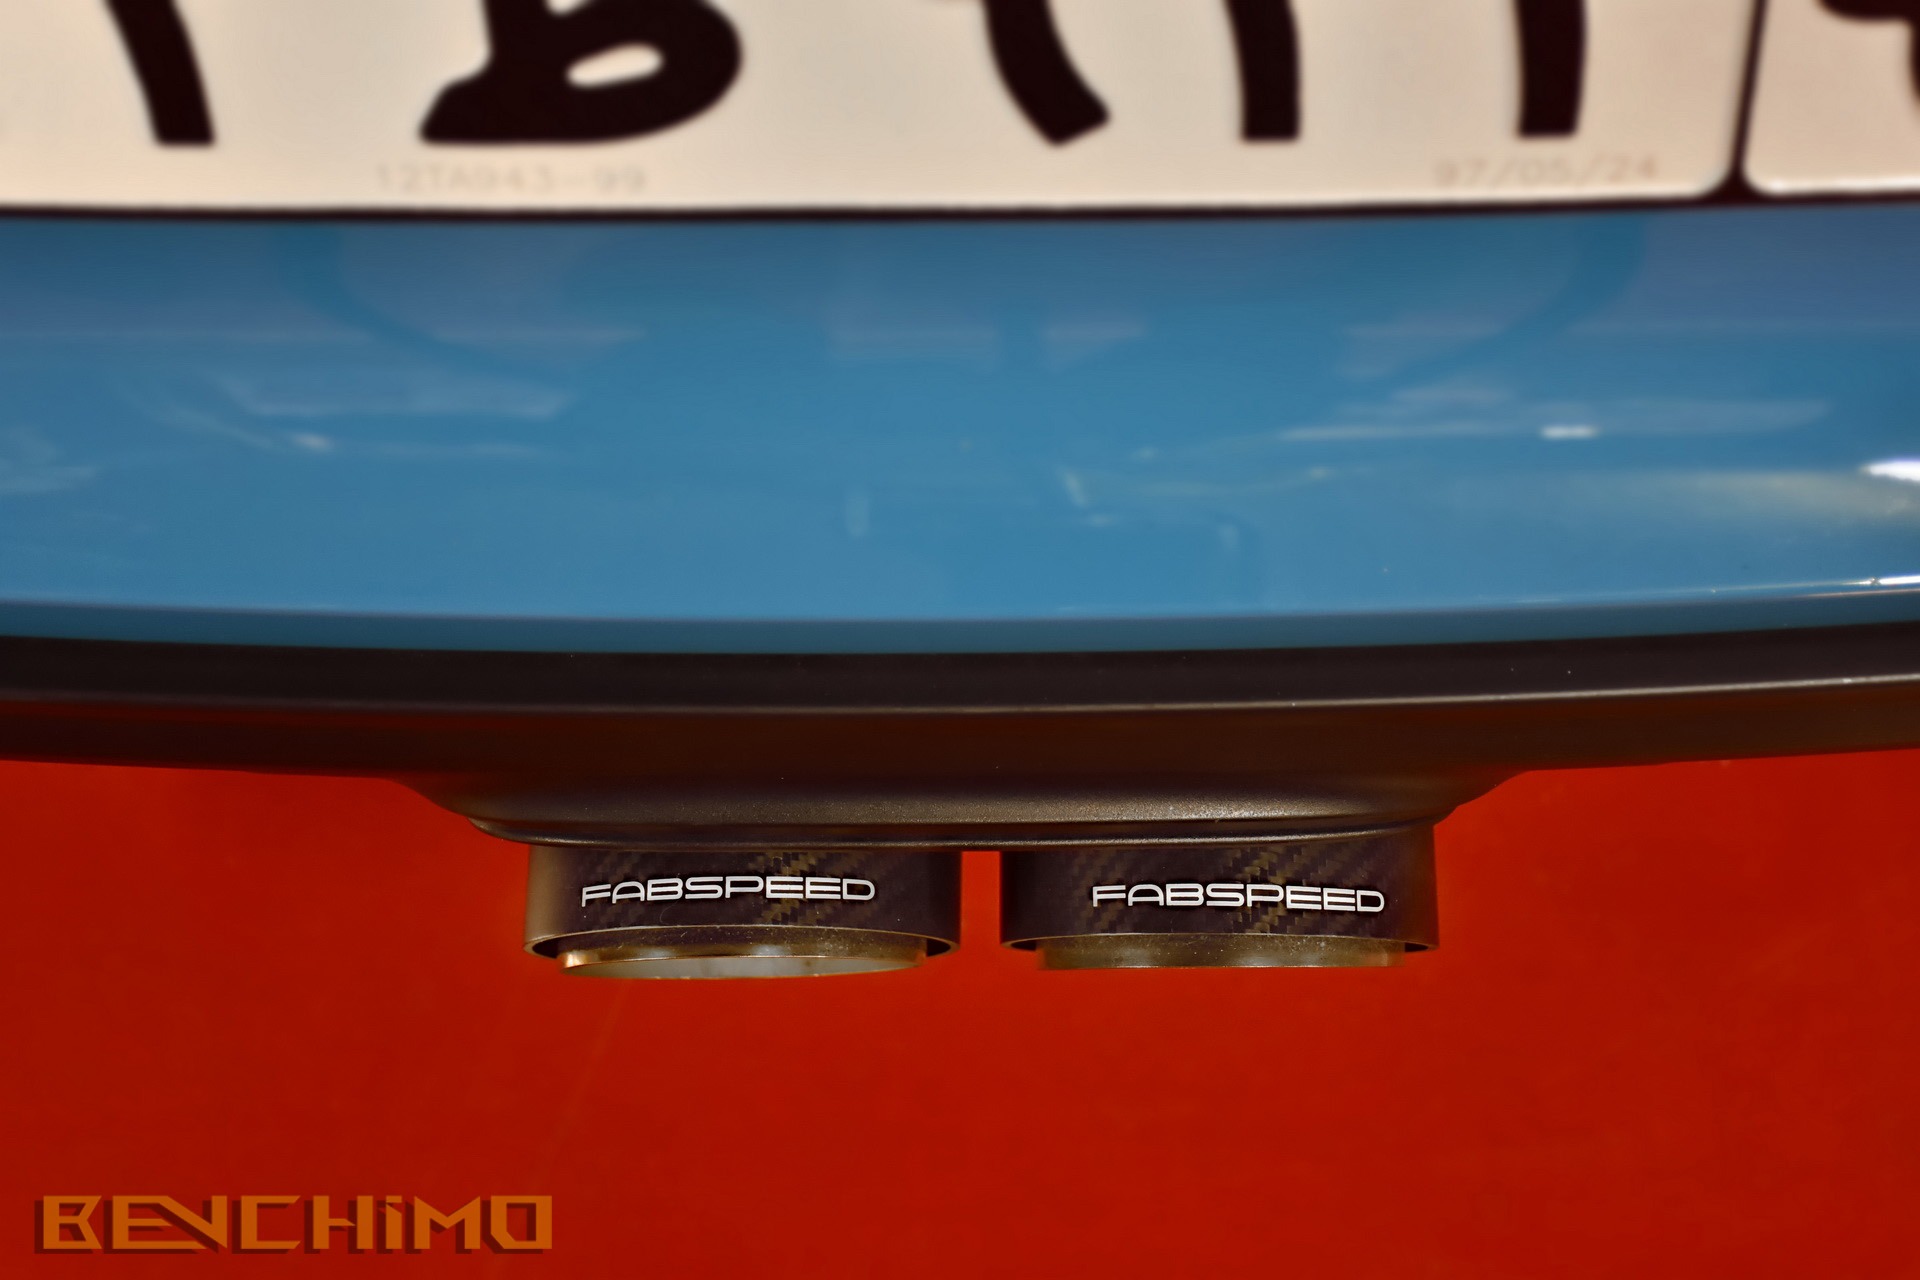 BENCHIMO CAR SHOW - 14 / خودرو لاکچری